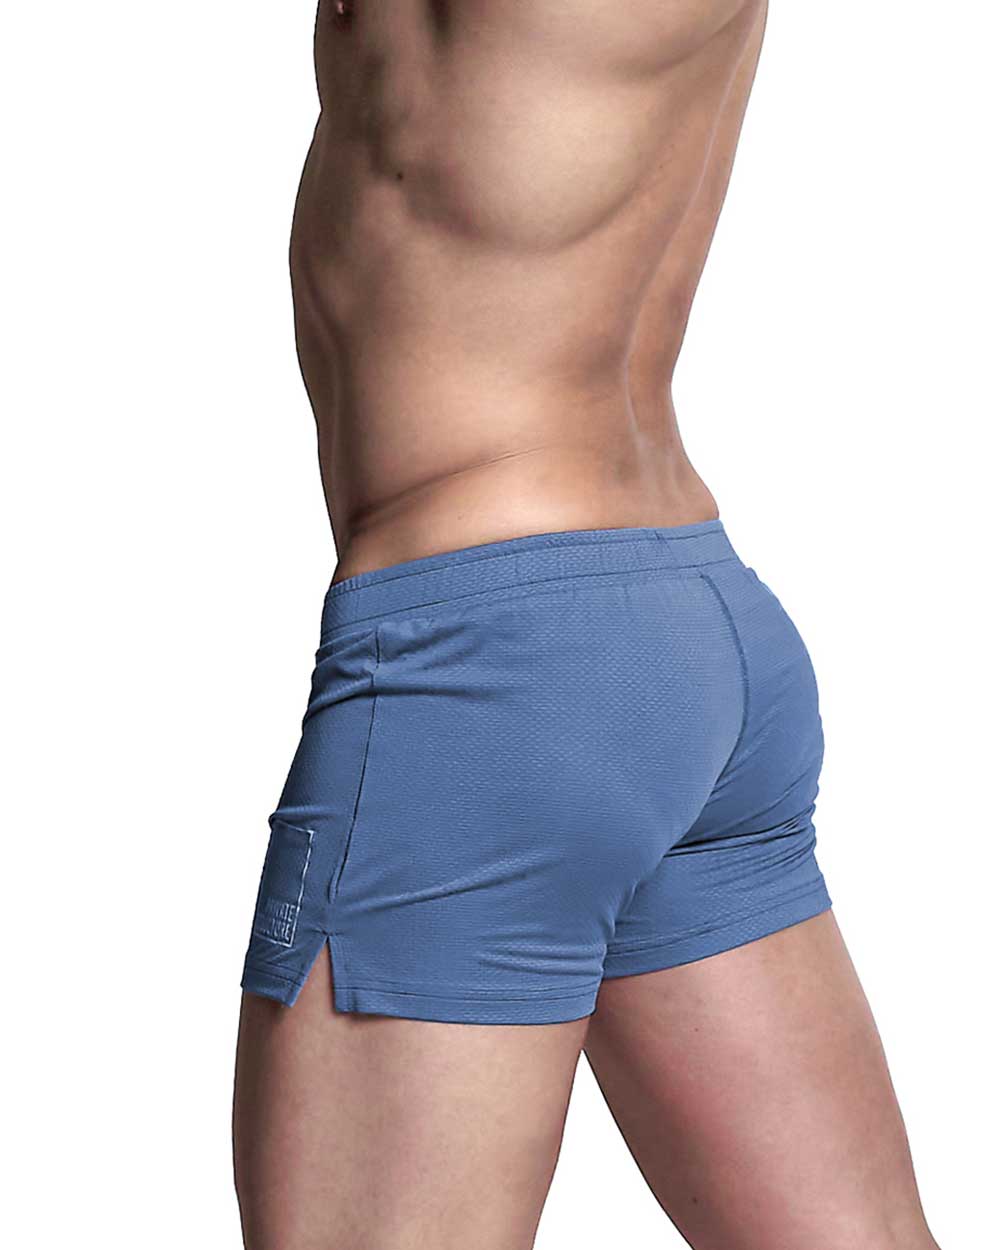 Evo.Boxer Lounge Shorts With Inner Bulge - Denim Blue [4331]